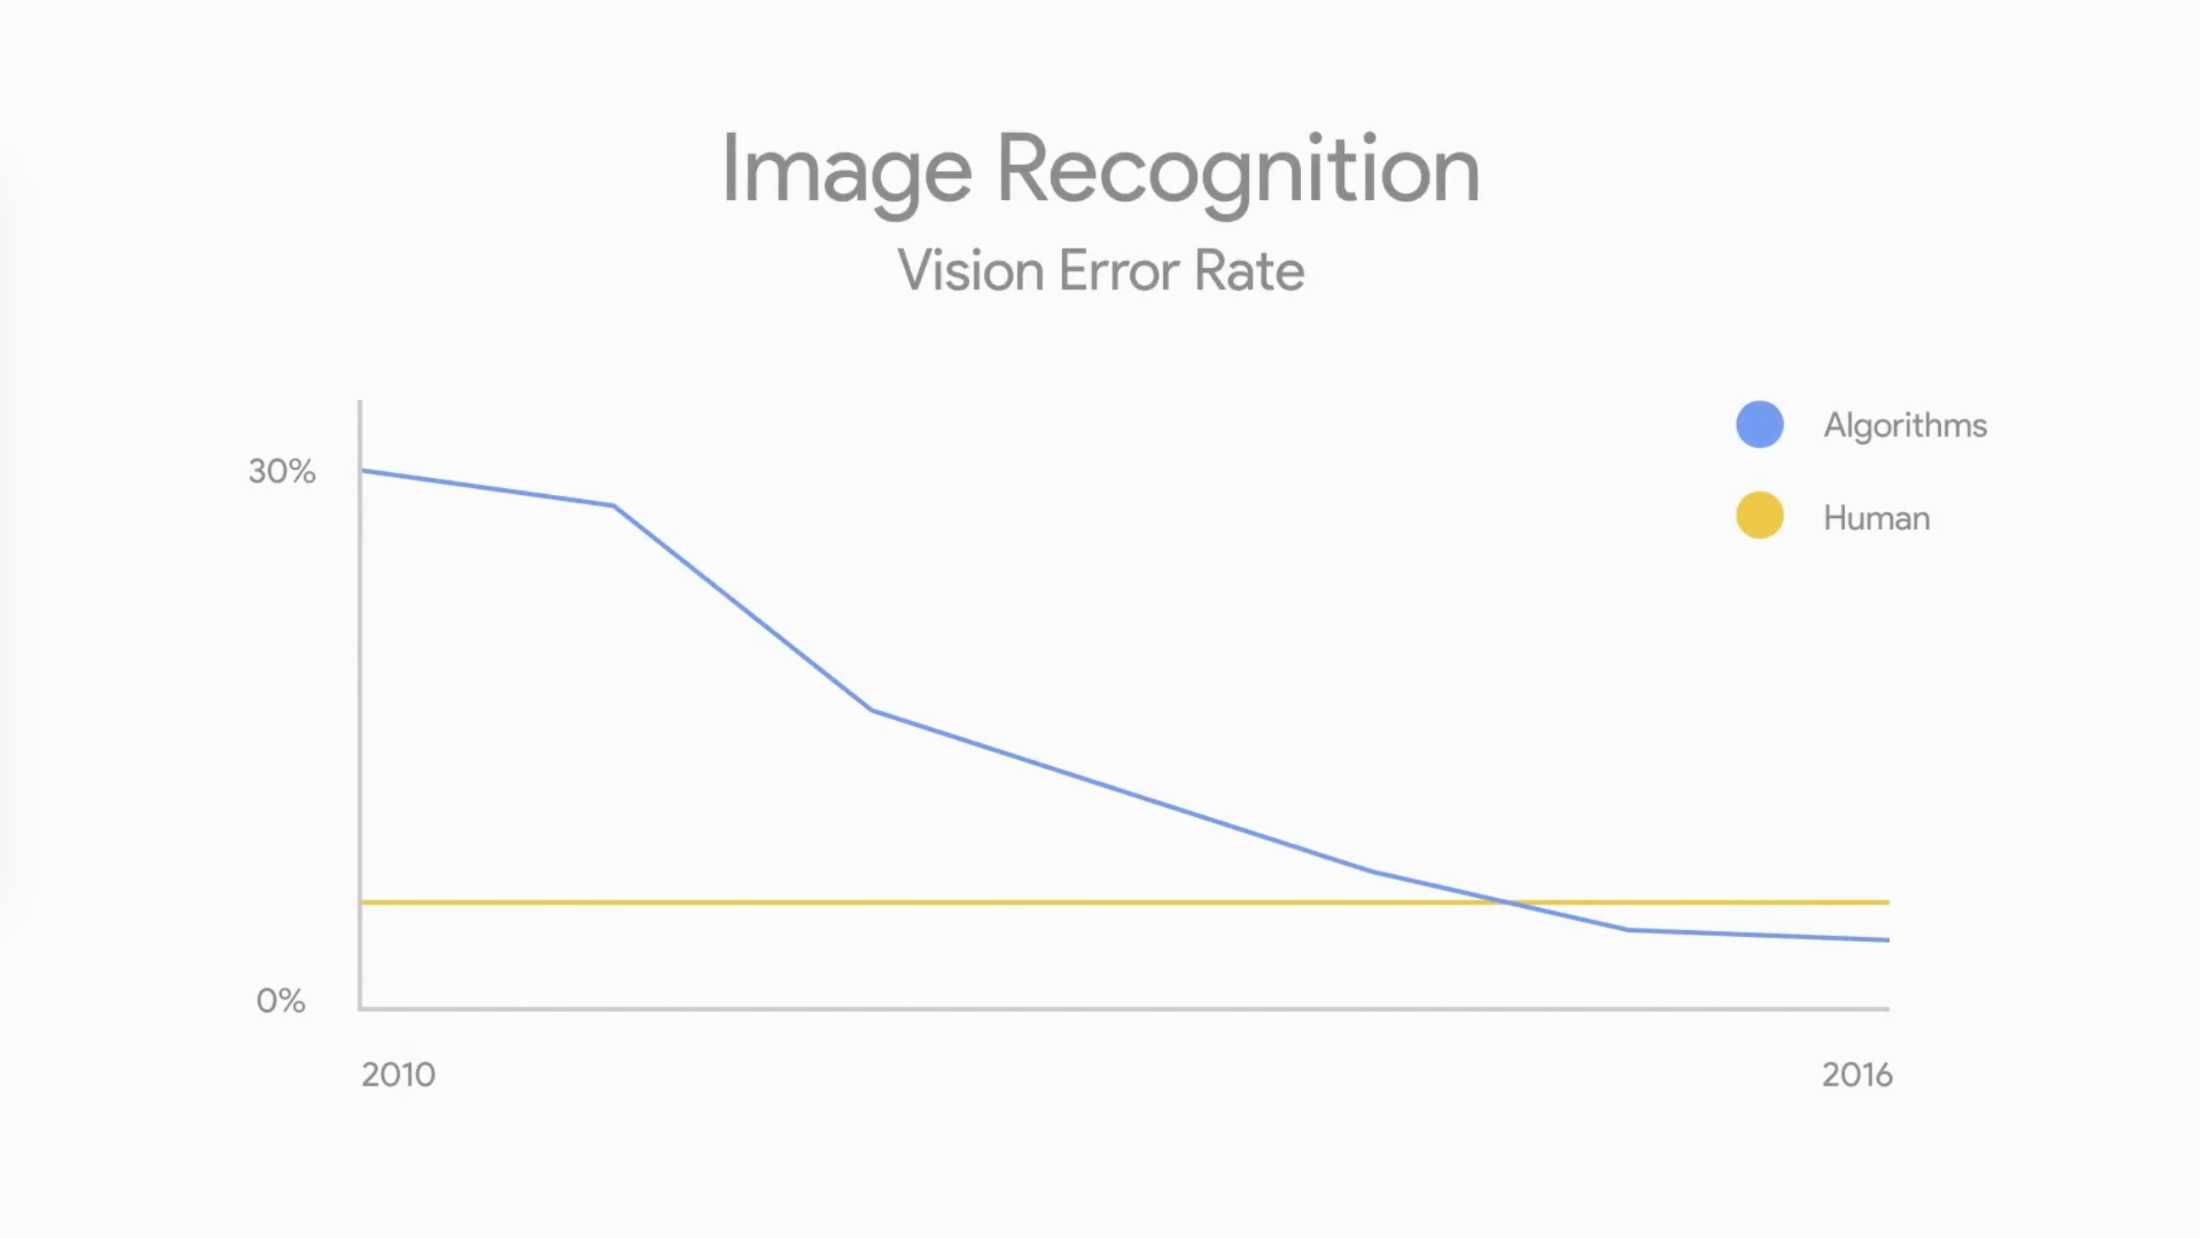 line graph showing error rate decline for image recognition using algorithms